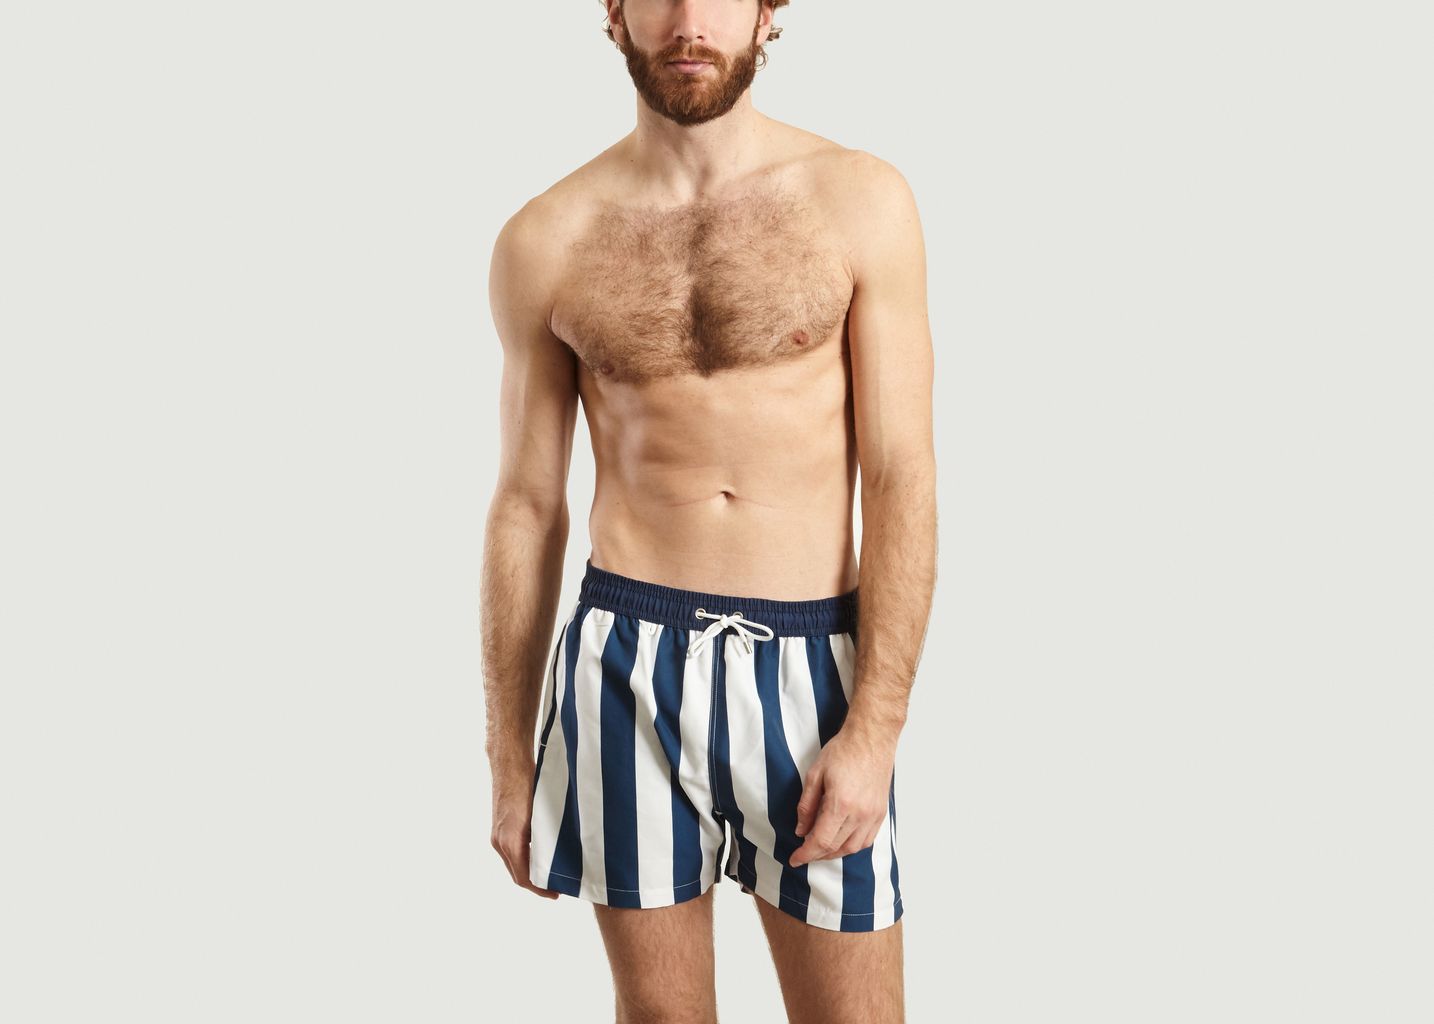 Big stripes swimming trunks - Surprise